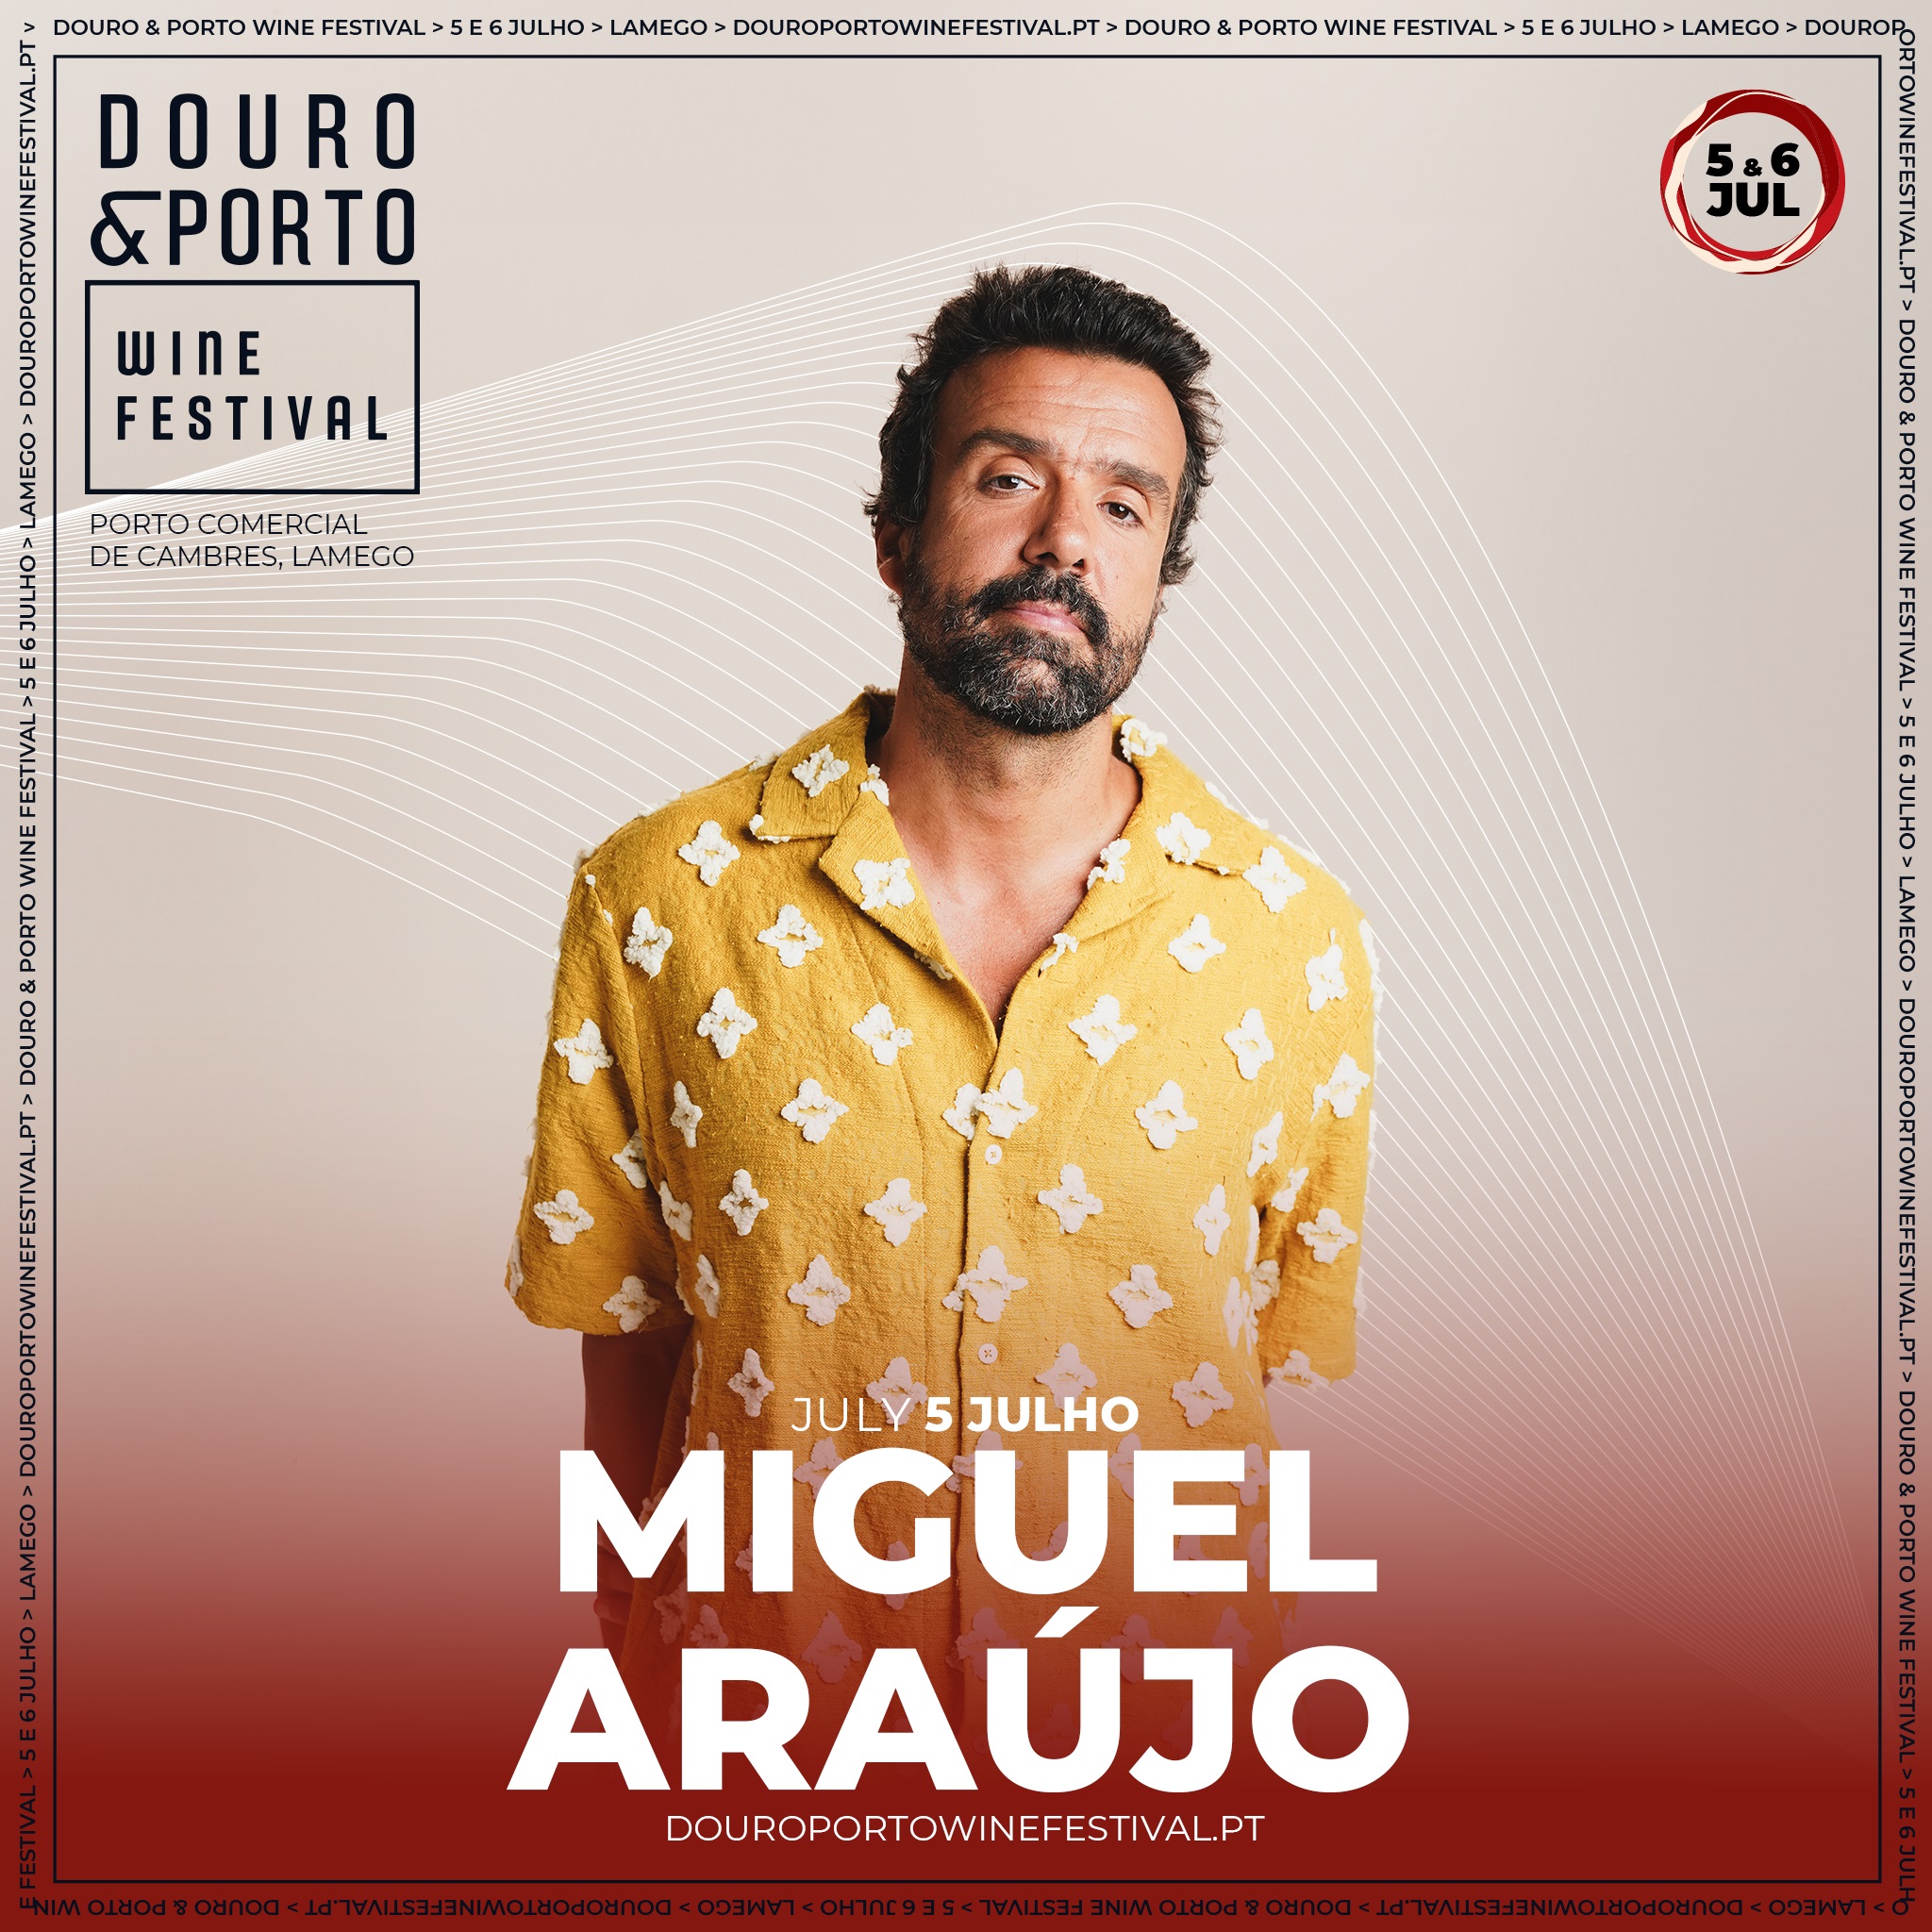 DOURO PORTO WINE FESTIVAL - Miguel Araújo